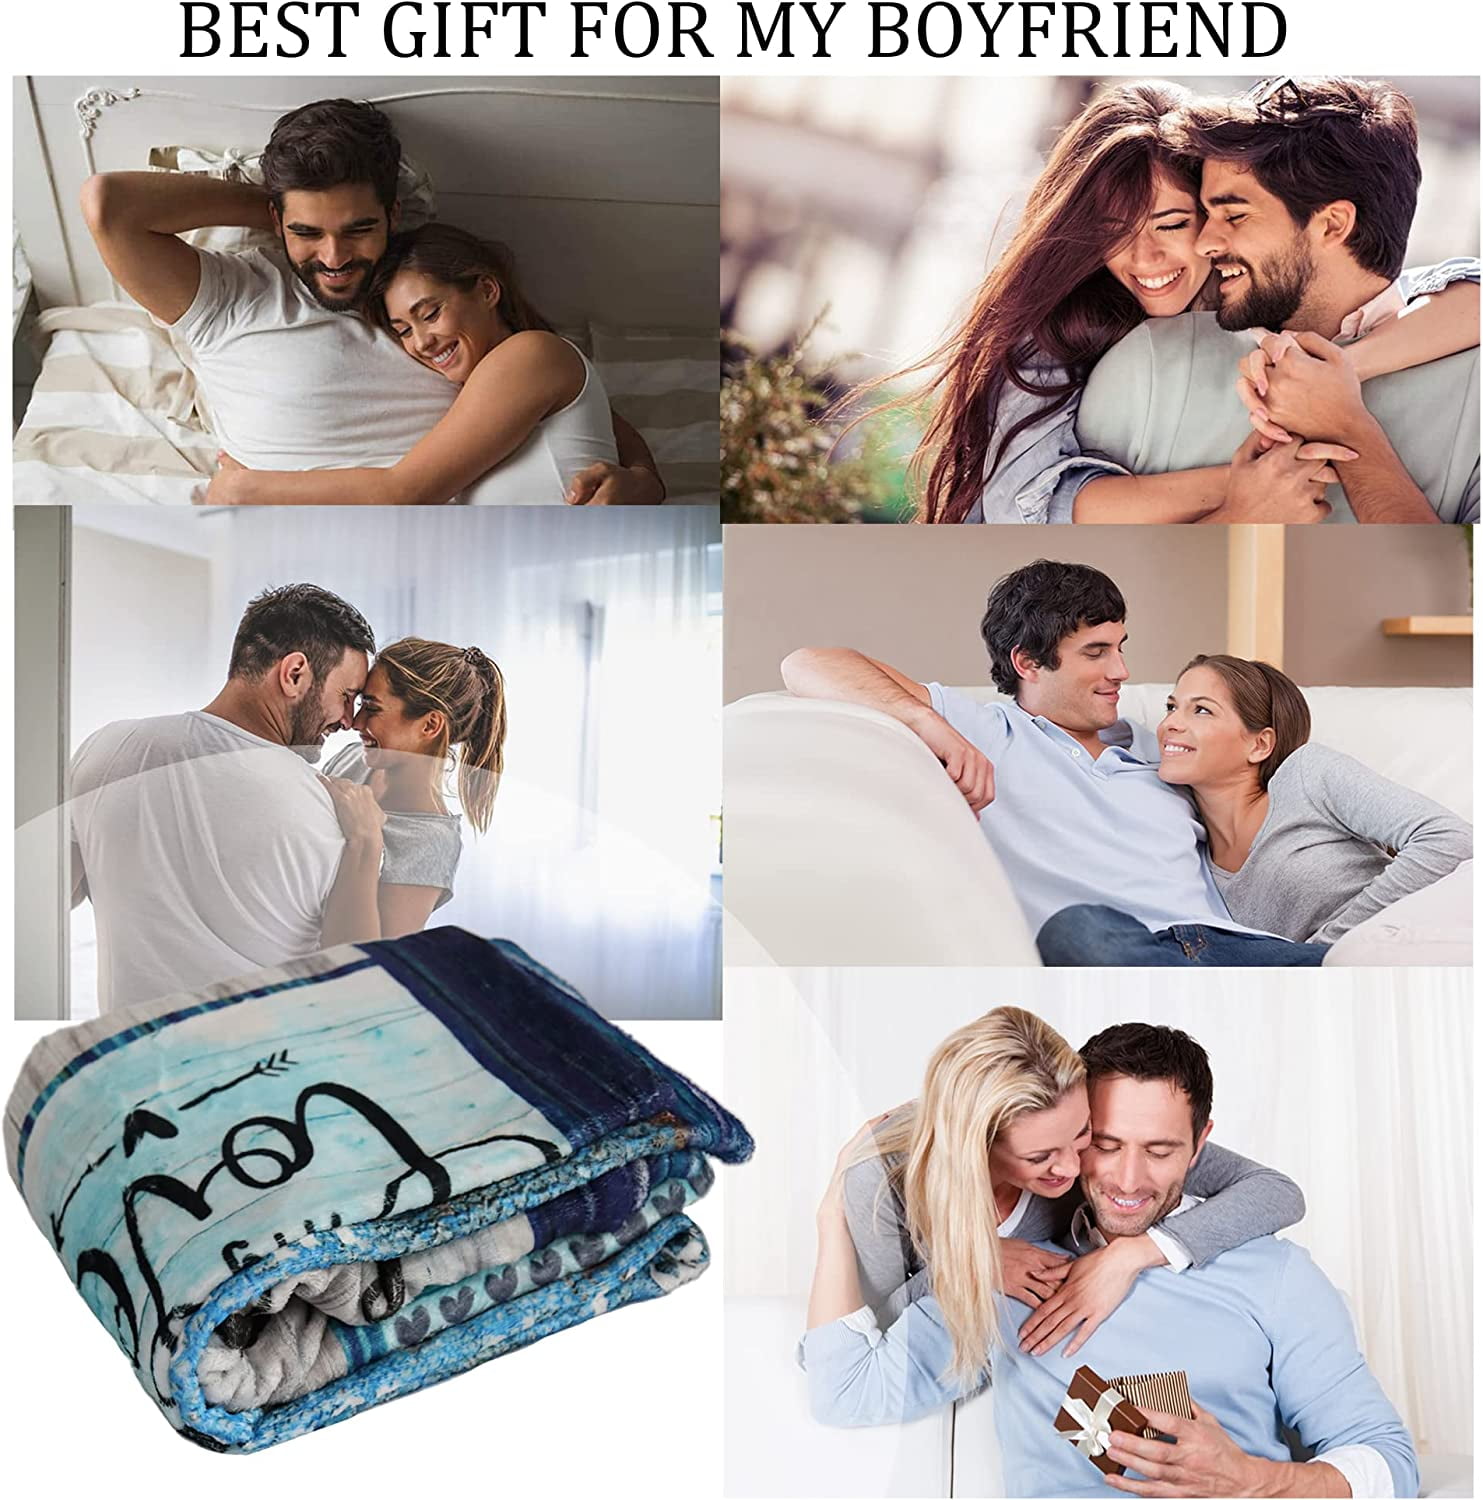 Blanket for Boyfriend, Boyfriend Gifts from Girlfriend